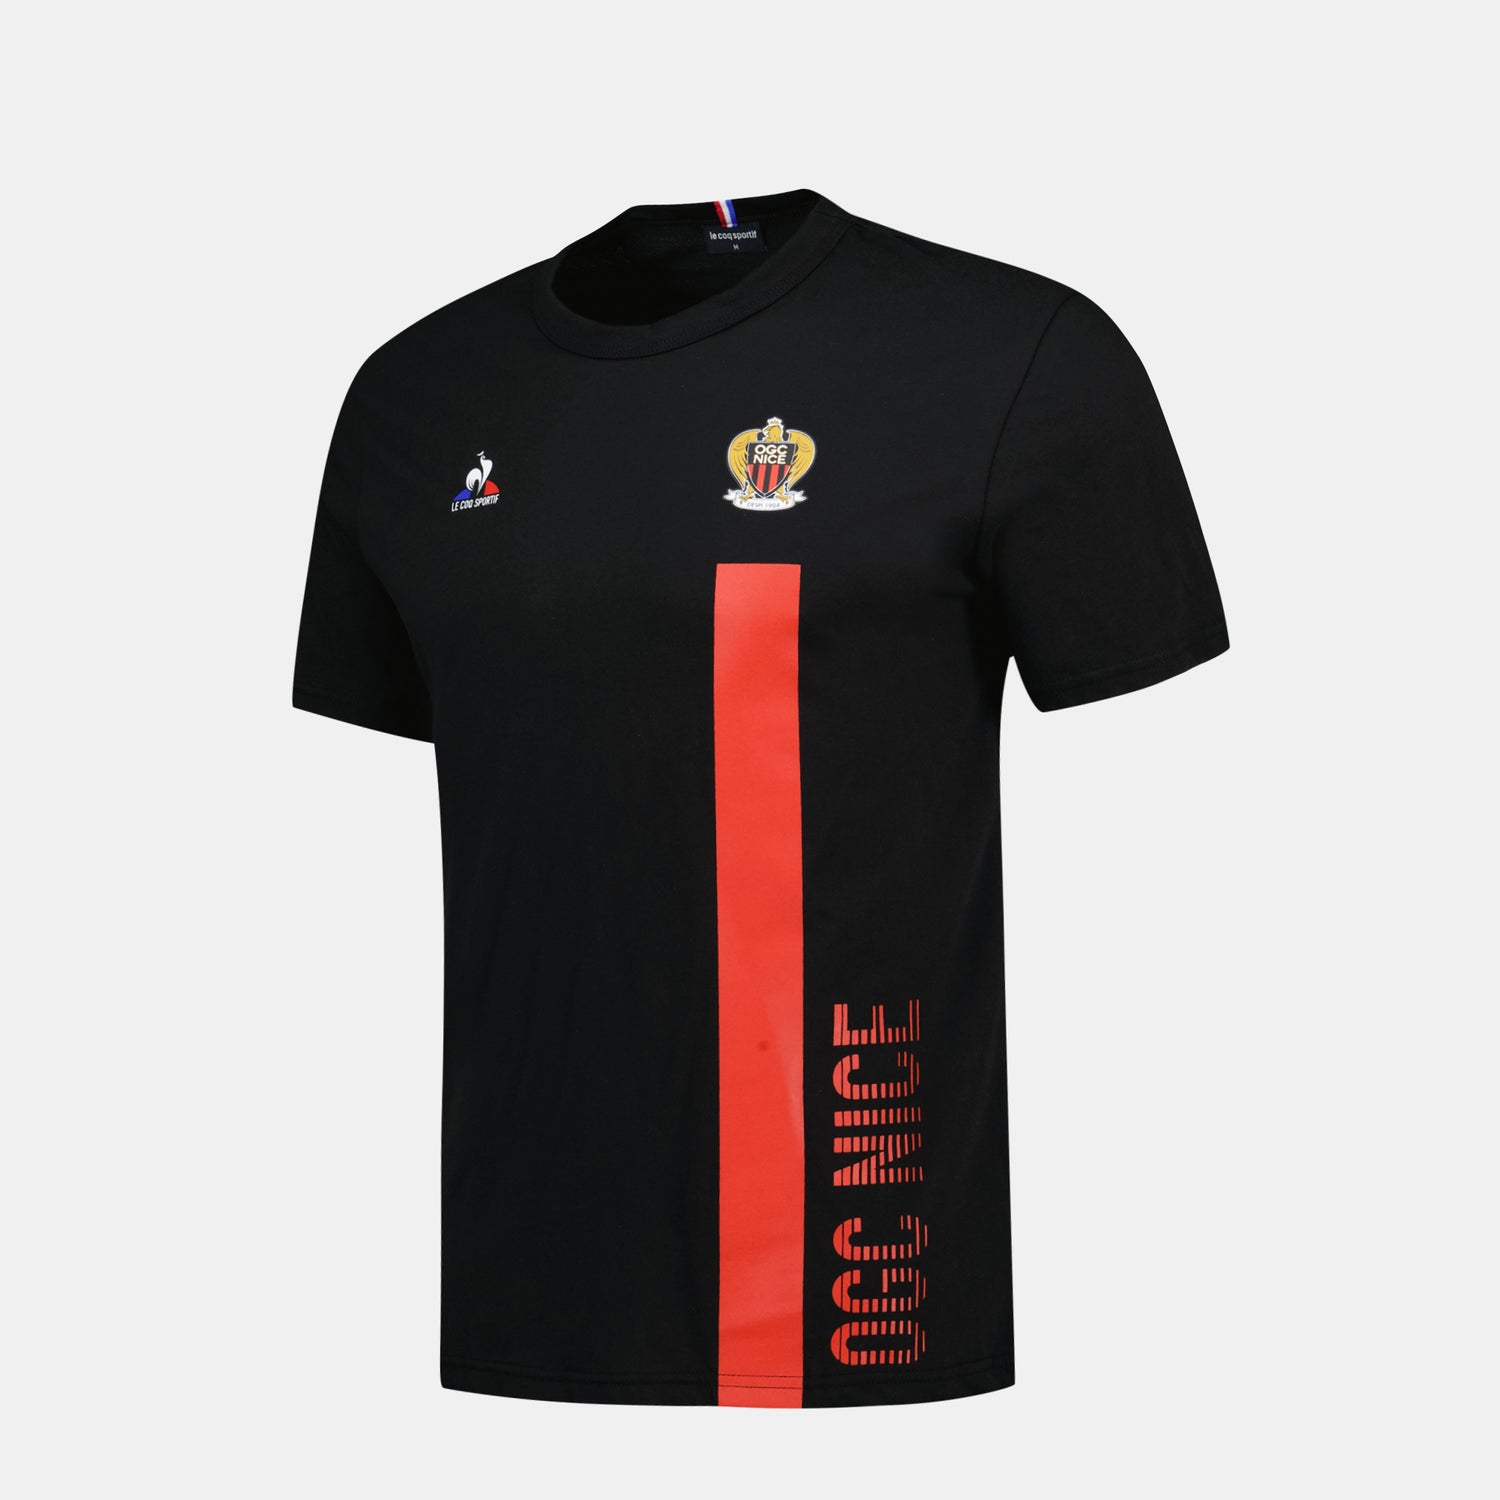 2321039-OGC NICE FANWEAR Tee SS N°1 M black/red  | Camiseta Hombre